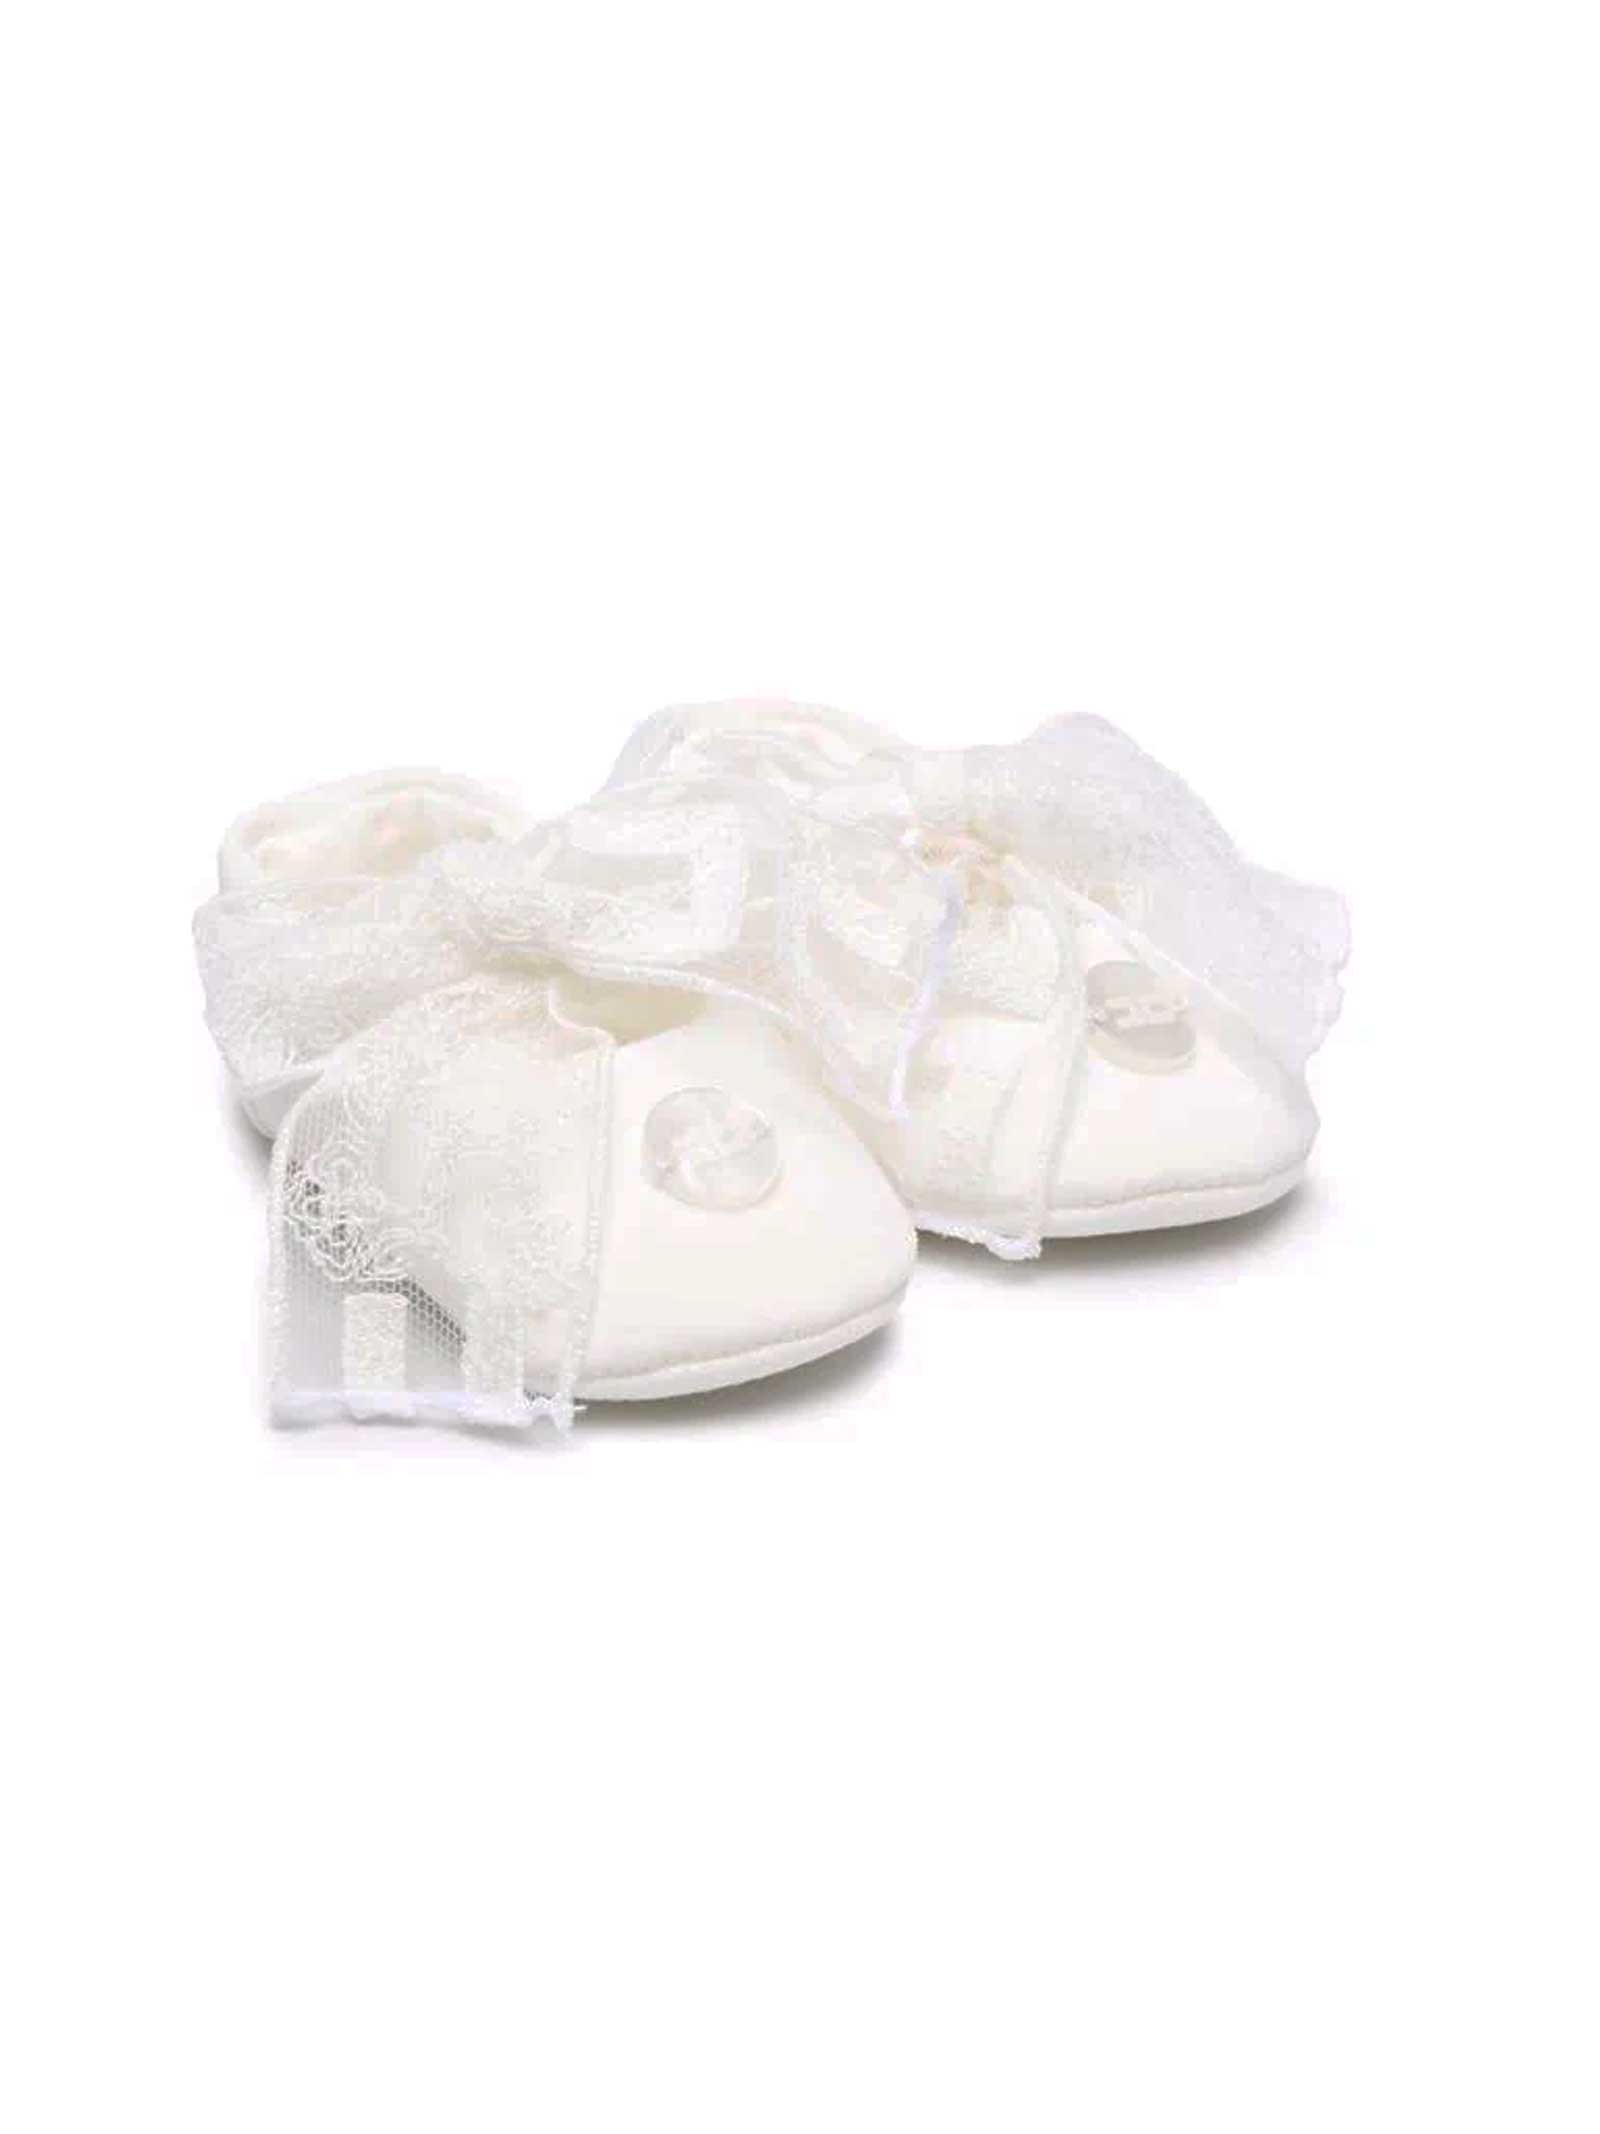 Elisabetta Franchi La Mia Bambina White Shoes With Ribbon